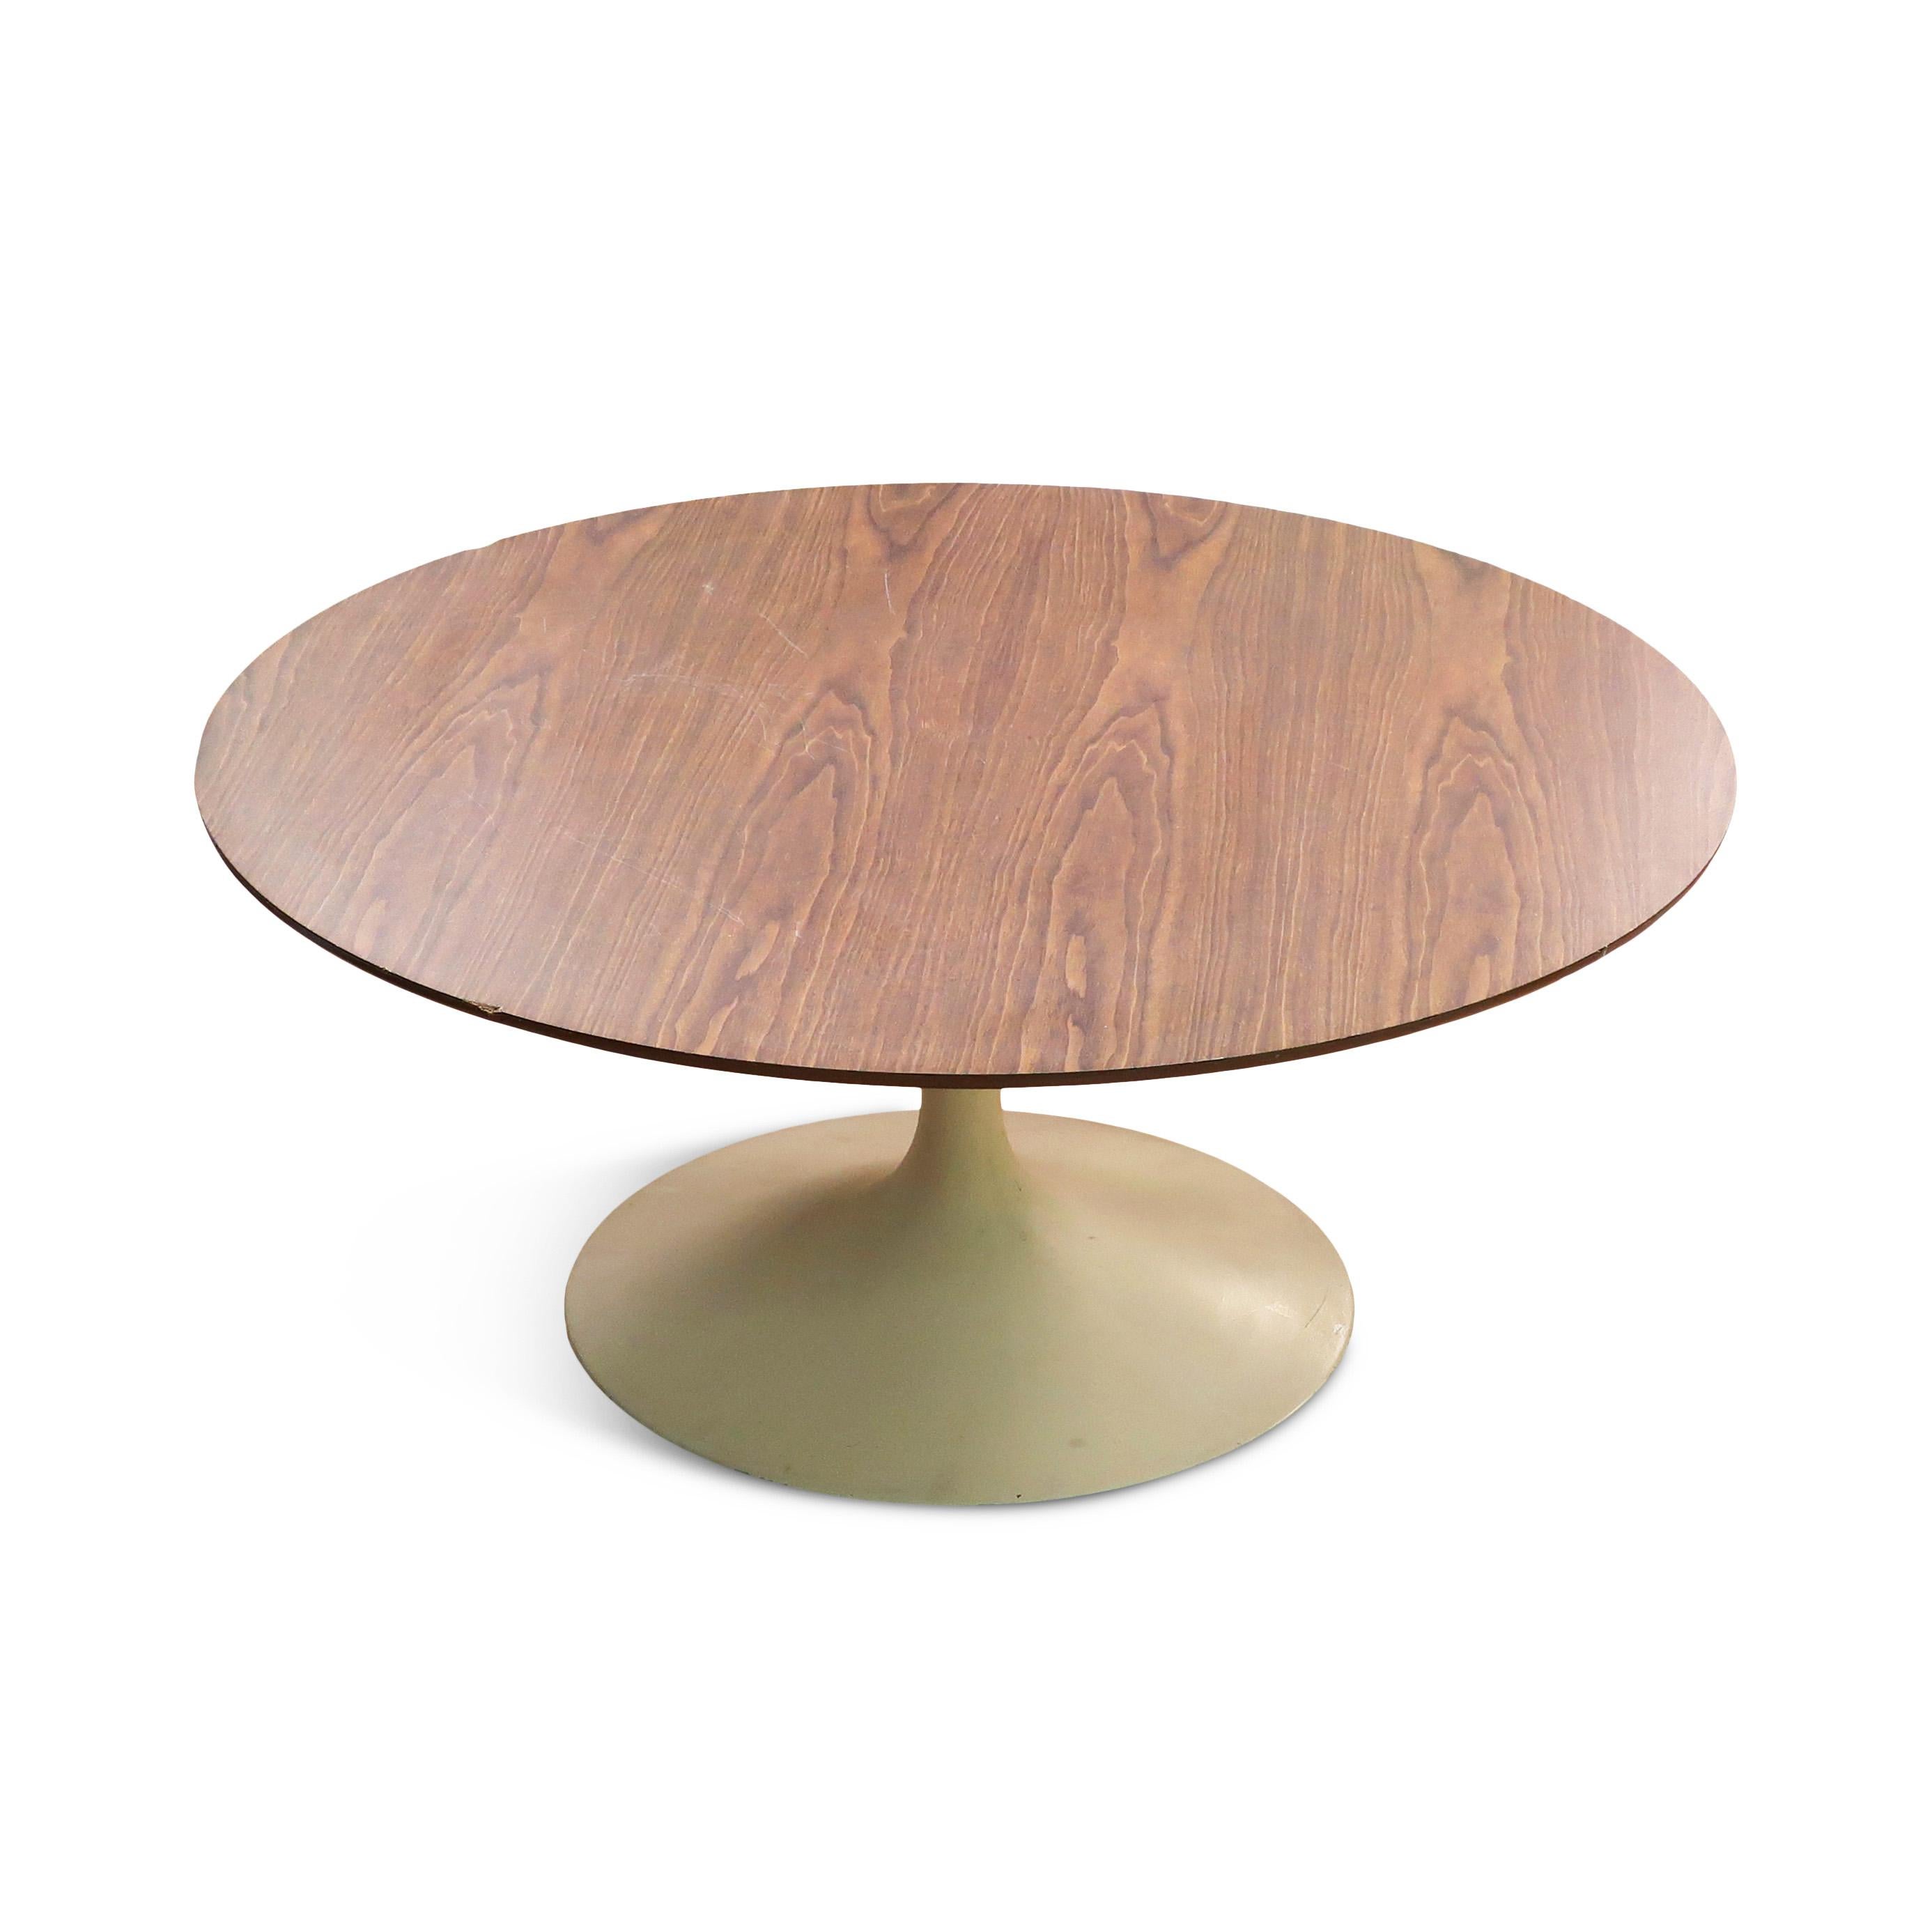 Vintage Tulip Coffee Table by Eero Saarinen for Knoll For Sale 2